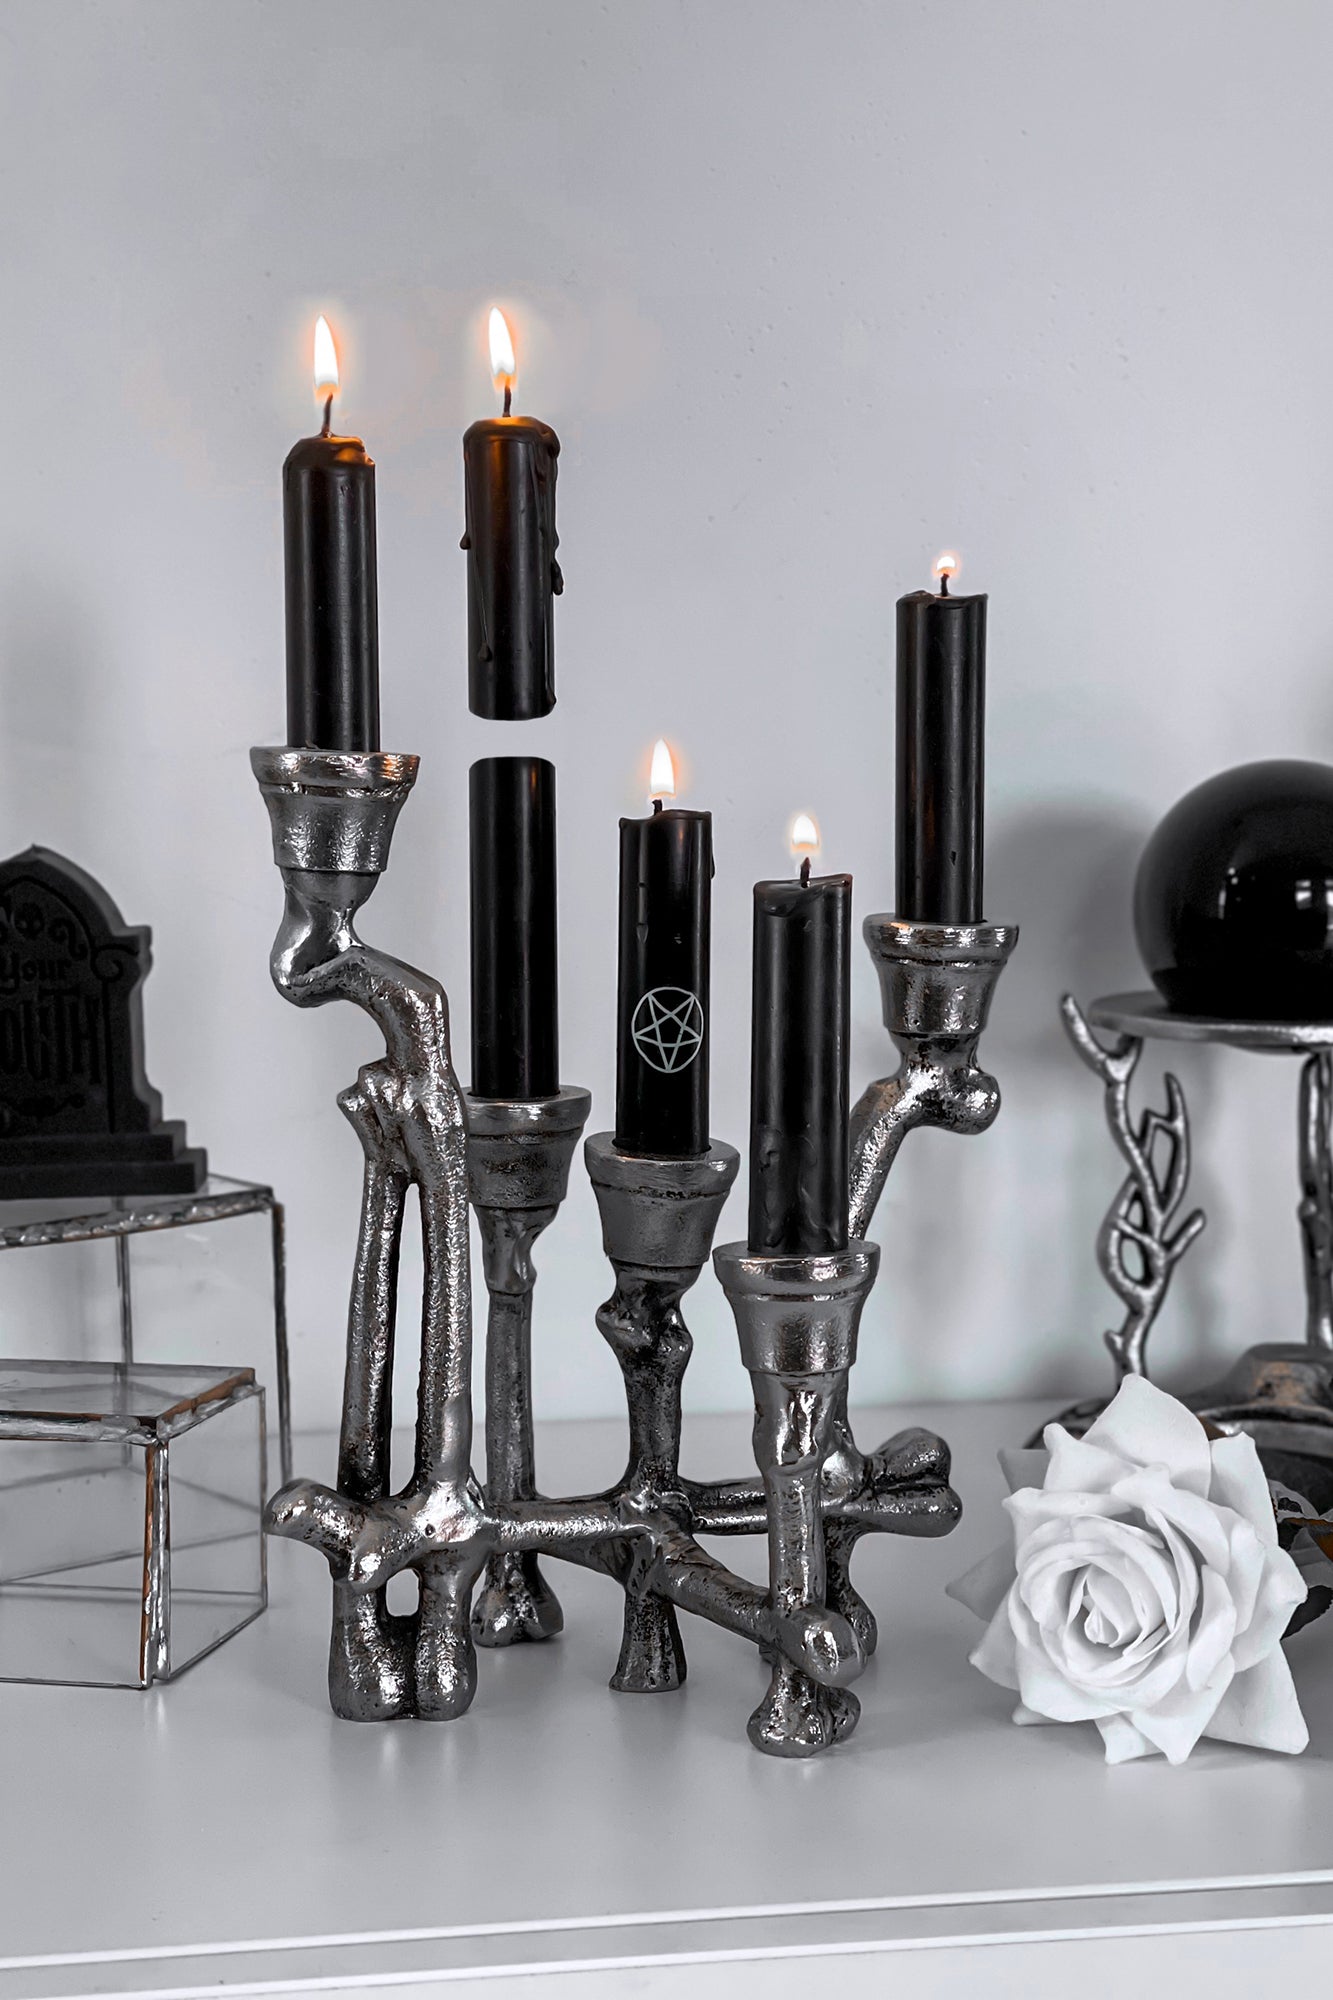 European Candlestick Candleholder Gothic Votive Tealight Holder